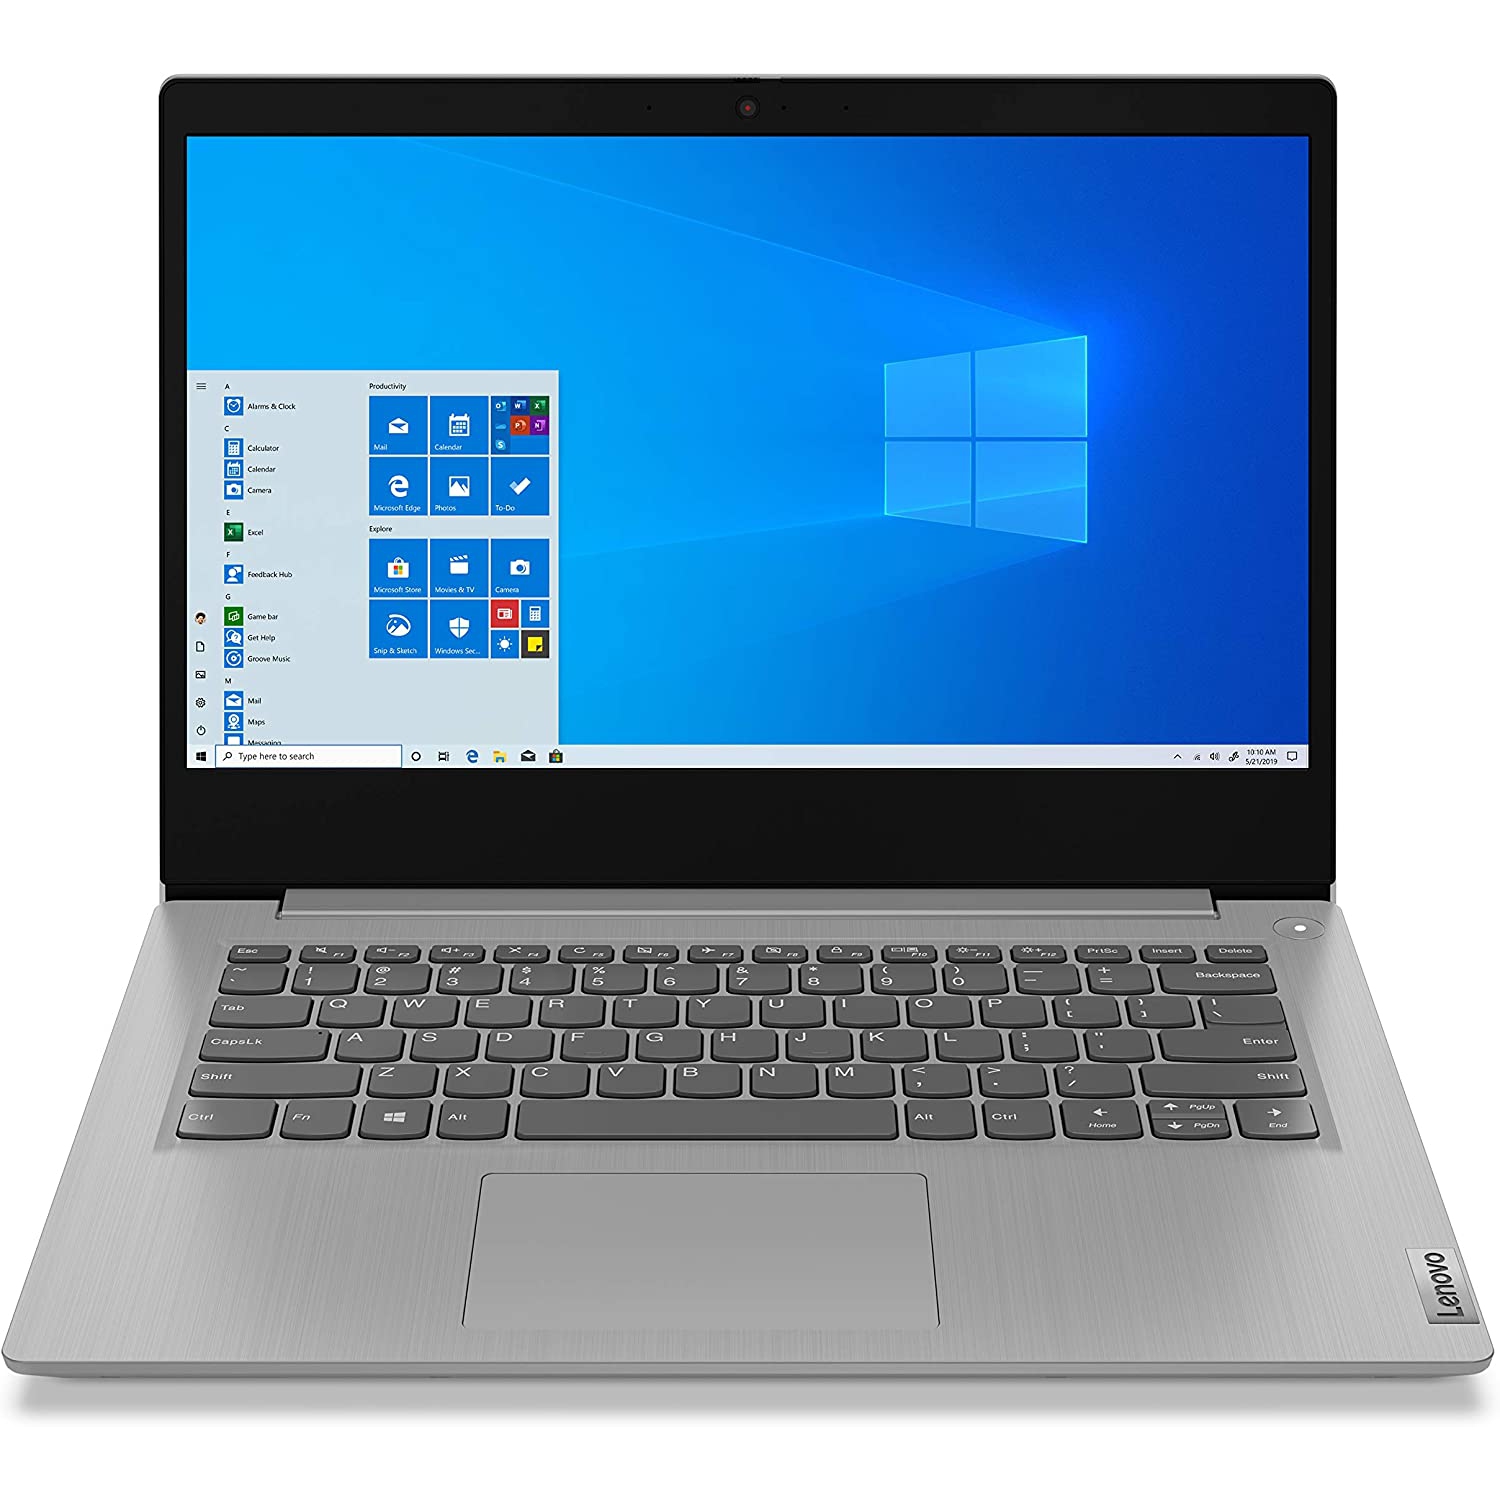 Lenovo Ideapad 3 14" FHD Laptop (Intel Core i3-1005G1, 4GB RAM, 128GB SSD, Windows 10 S) - Platinum Grey (81WD010QUS)